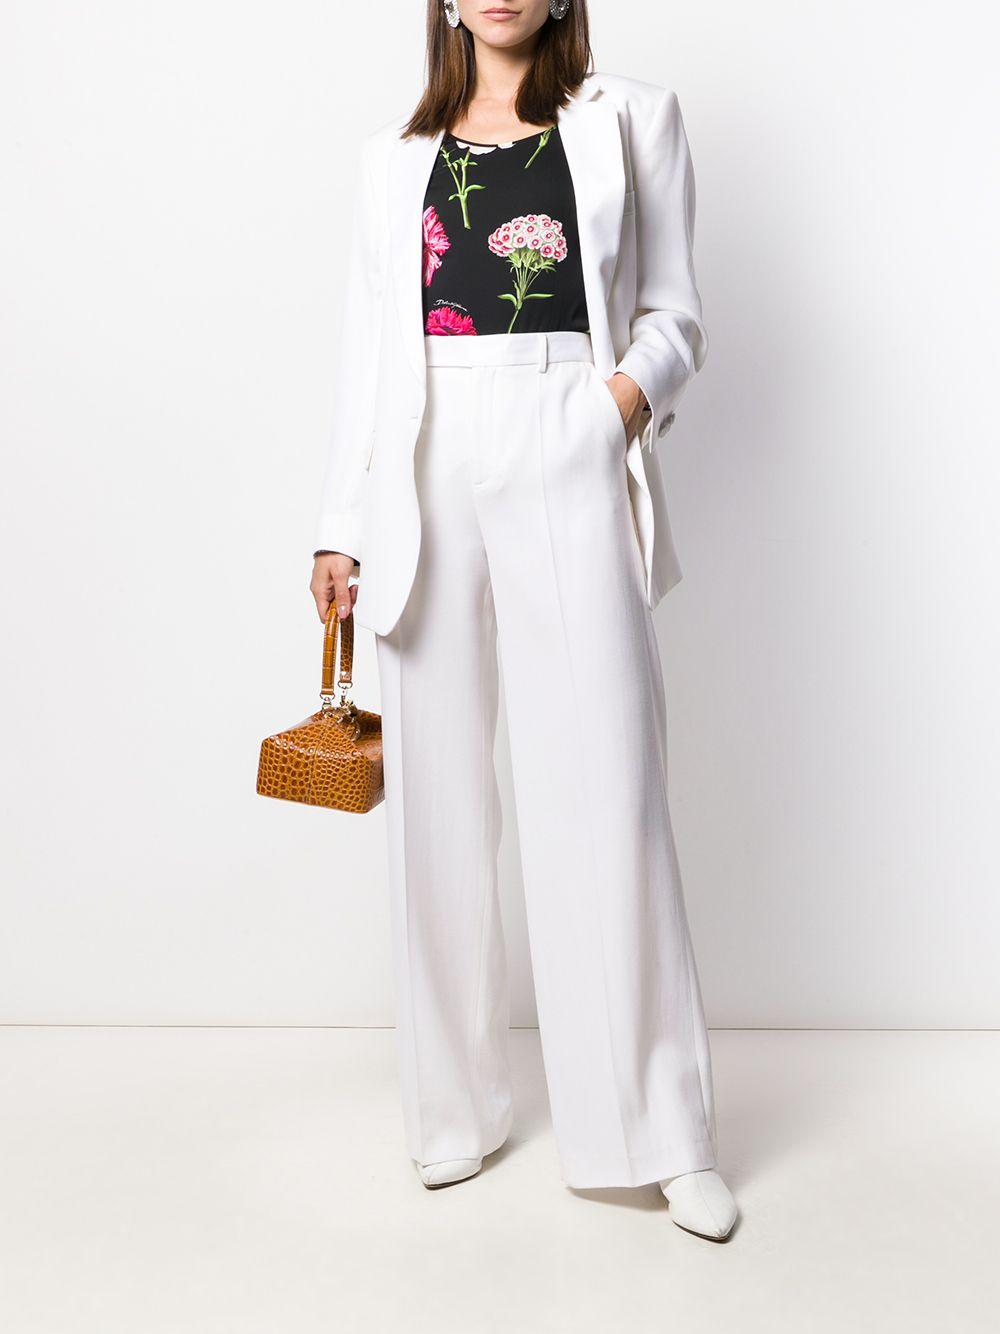 Dolce & Gabbana Scoop Neck Floral Print Blouse - Farfetch